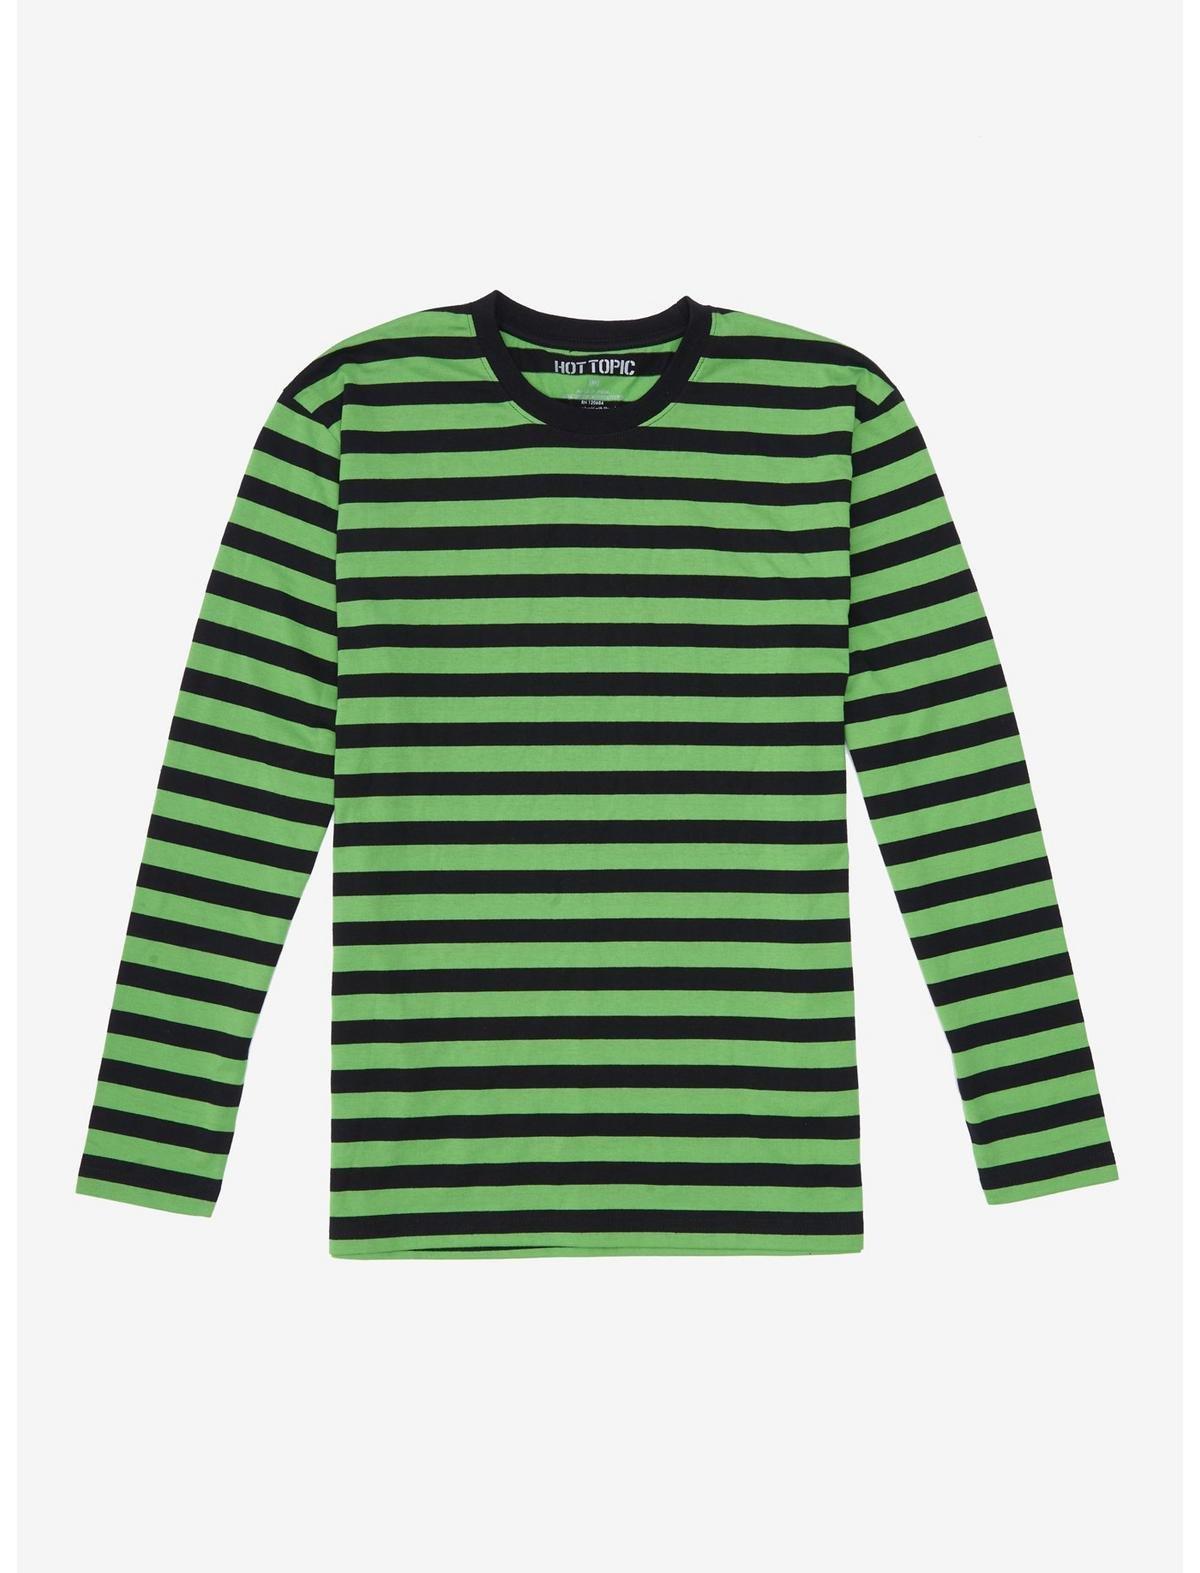 Green & Black Stripe Long-Sleeve T-Shirt, BLACK  GREEN, hi-res